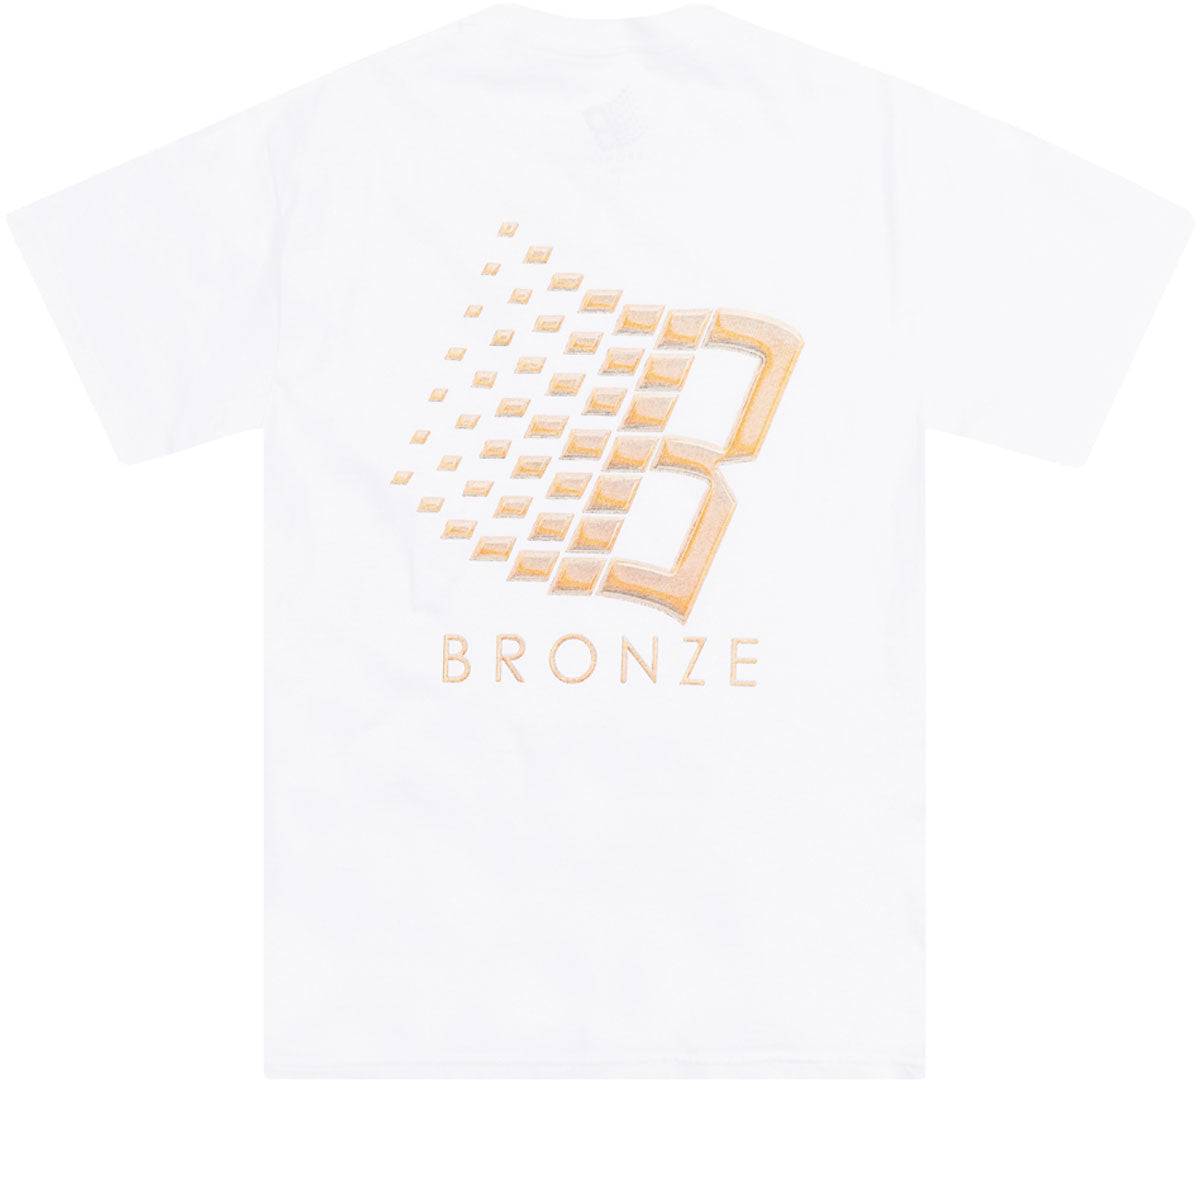 Bronze 56k Balloon Logo T-Shirt - White image 1